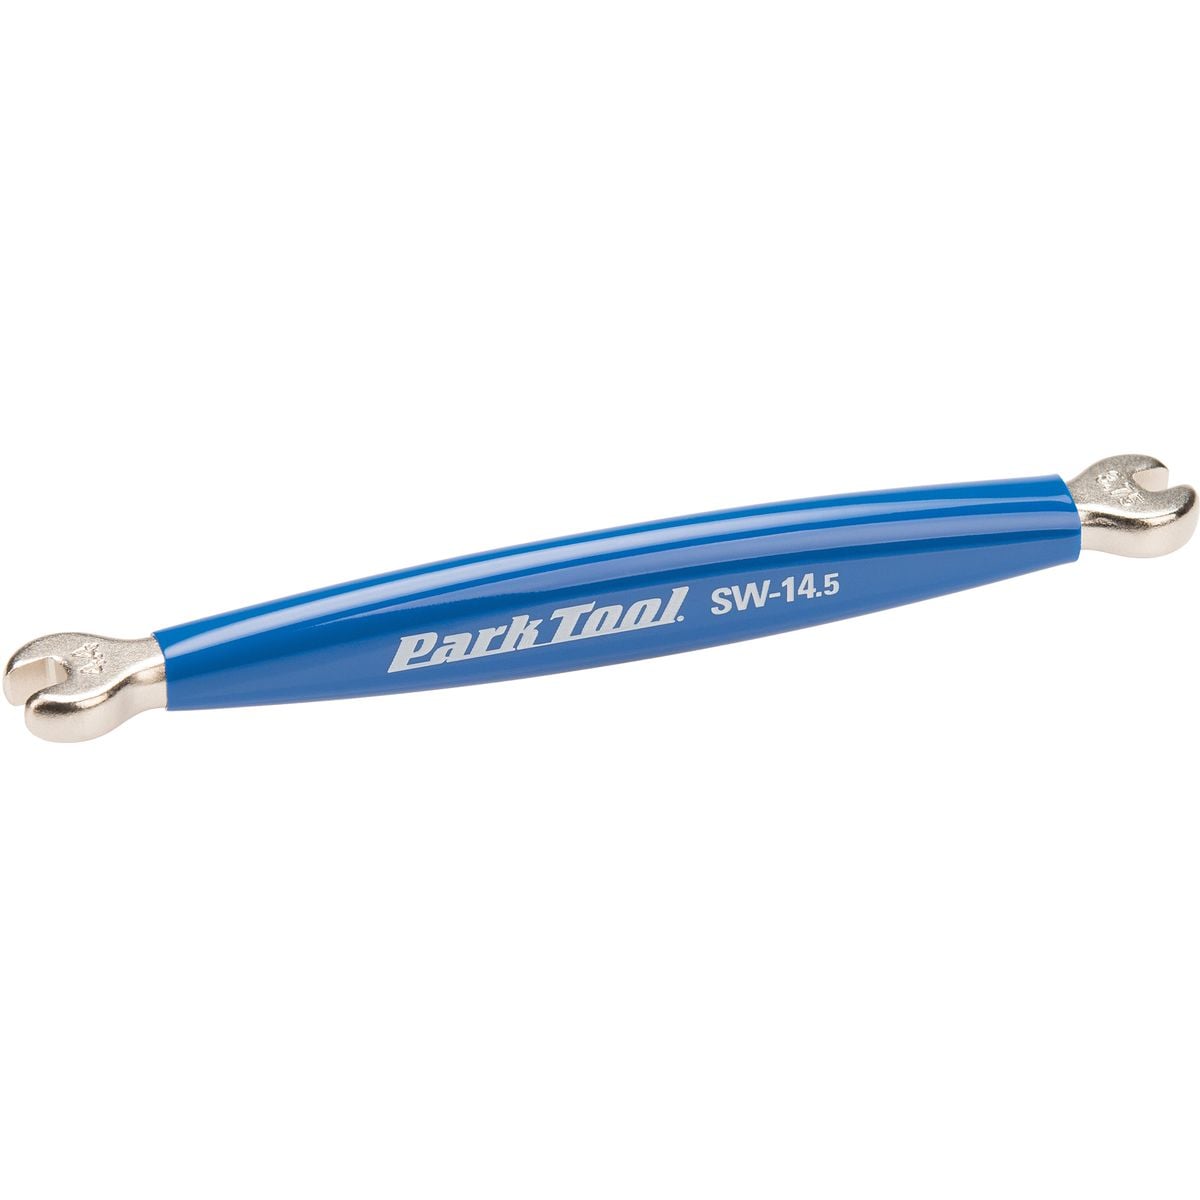 Sw-14.5 спицеевый ключ shimano wheel systems Park Tool, синий конусный ключ park tool 17мм